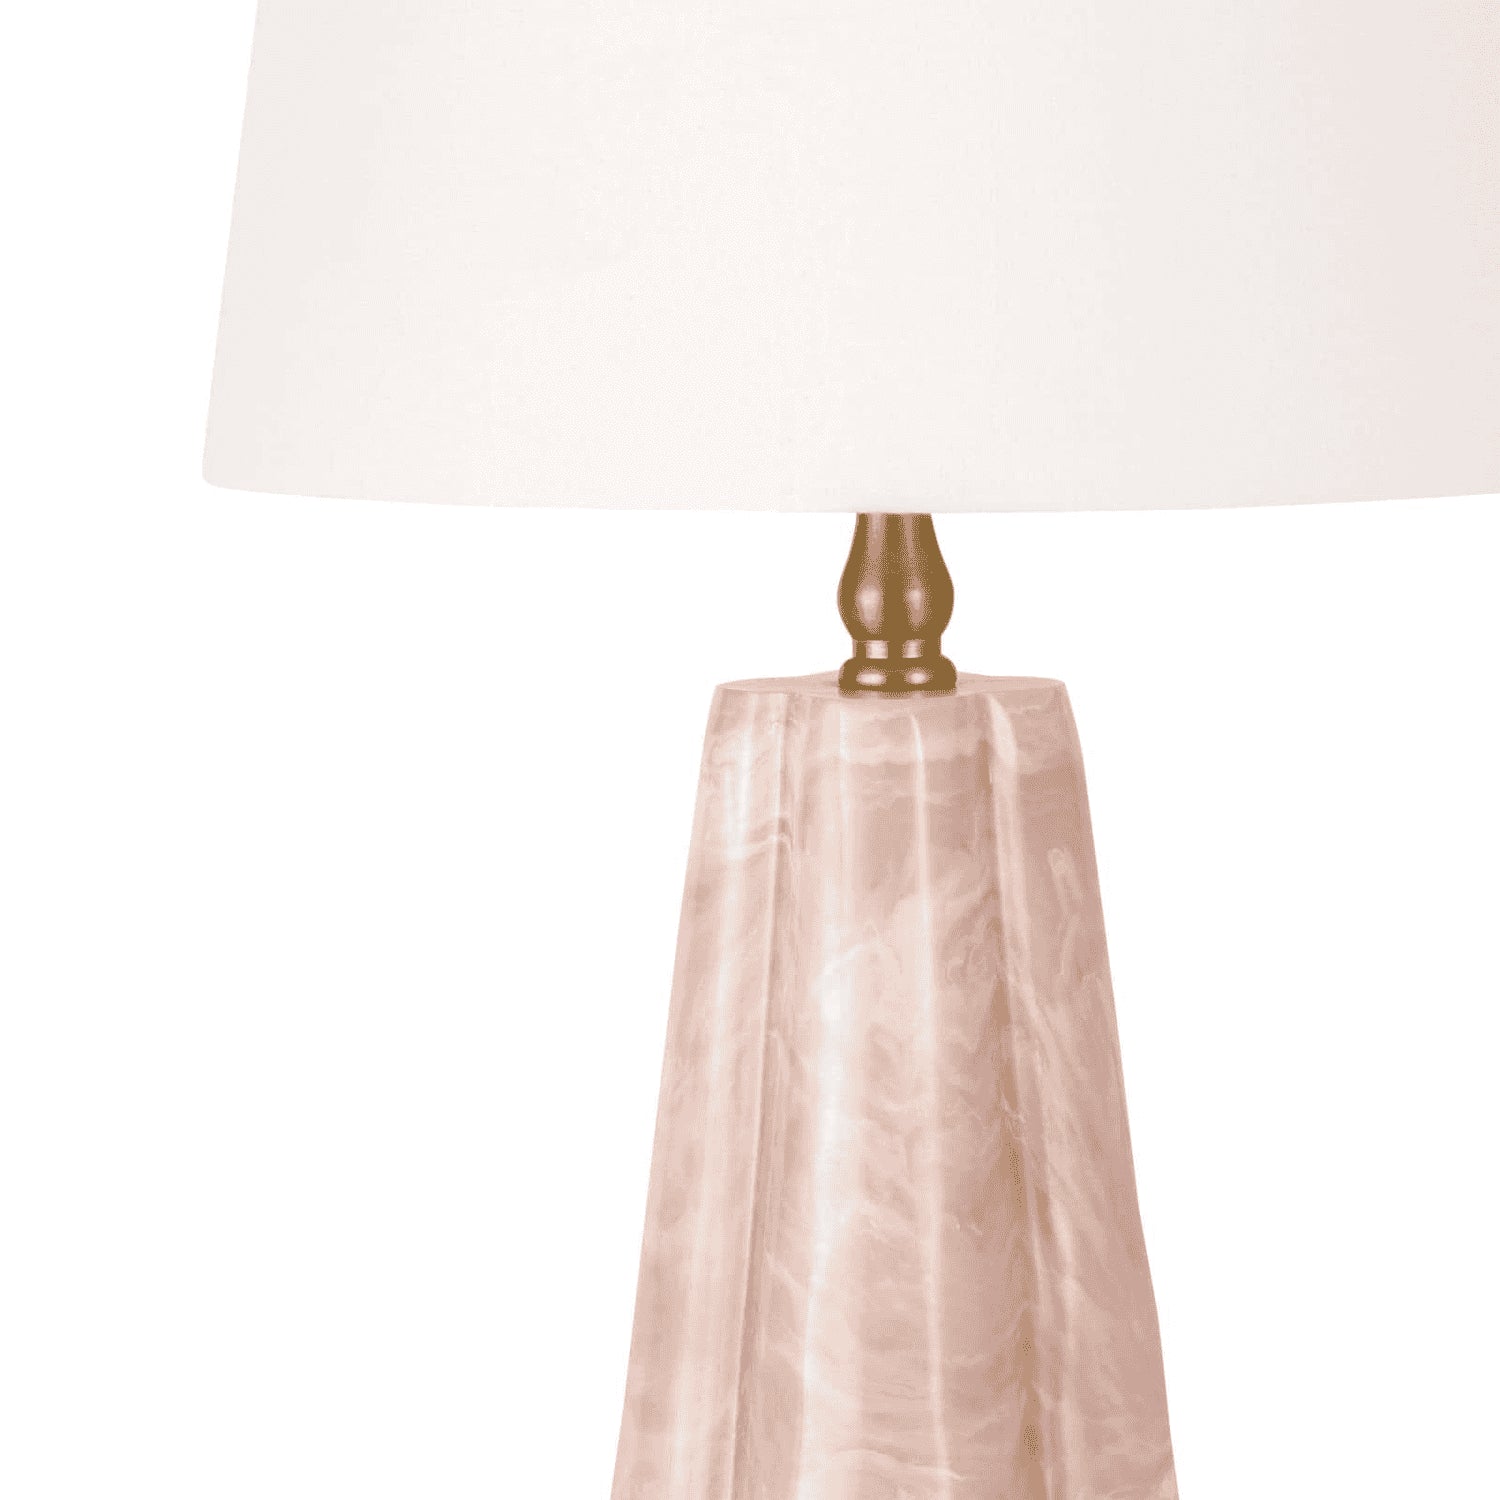 Celeste Crystal Mini Lamp